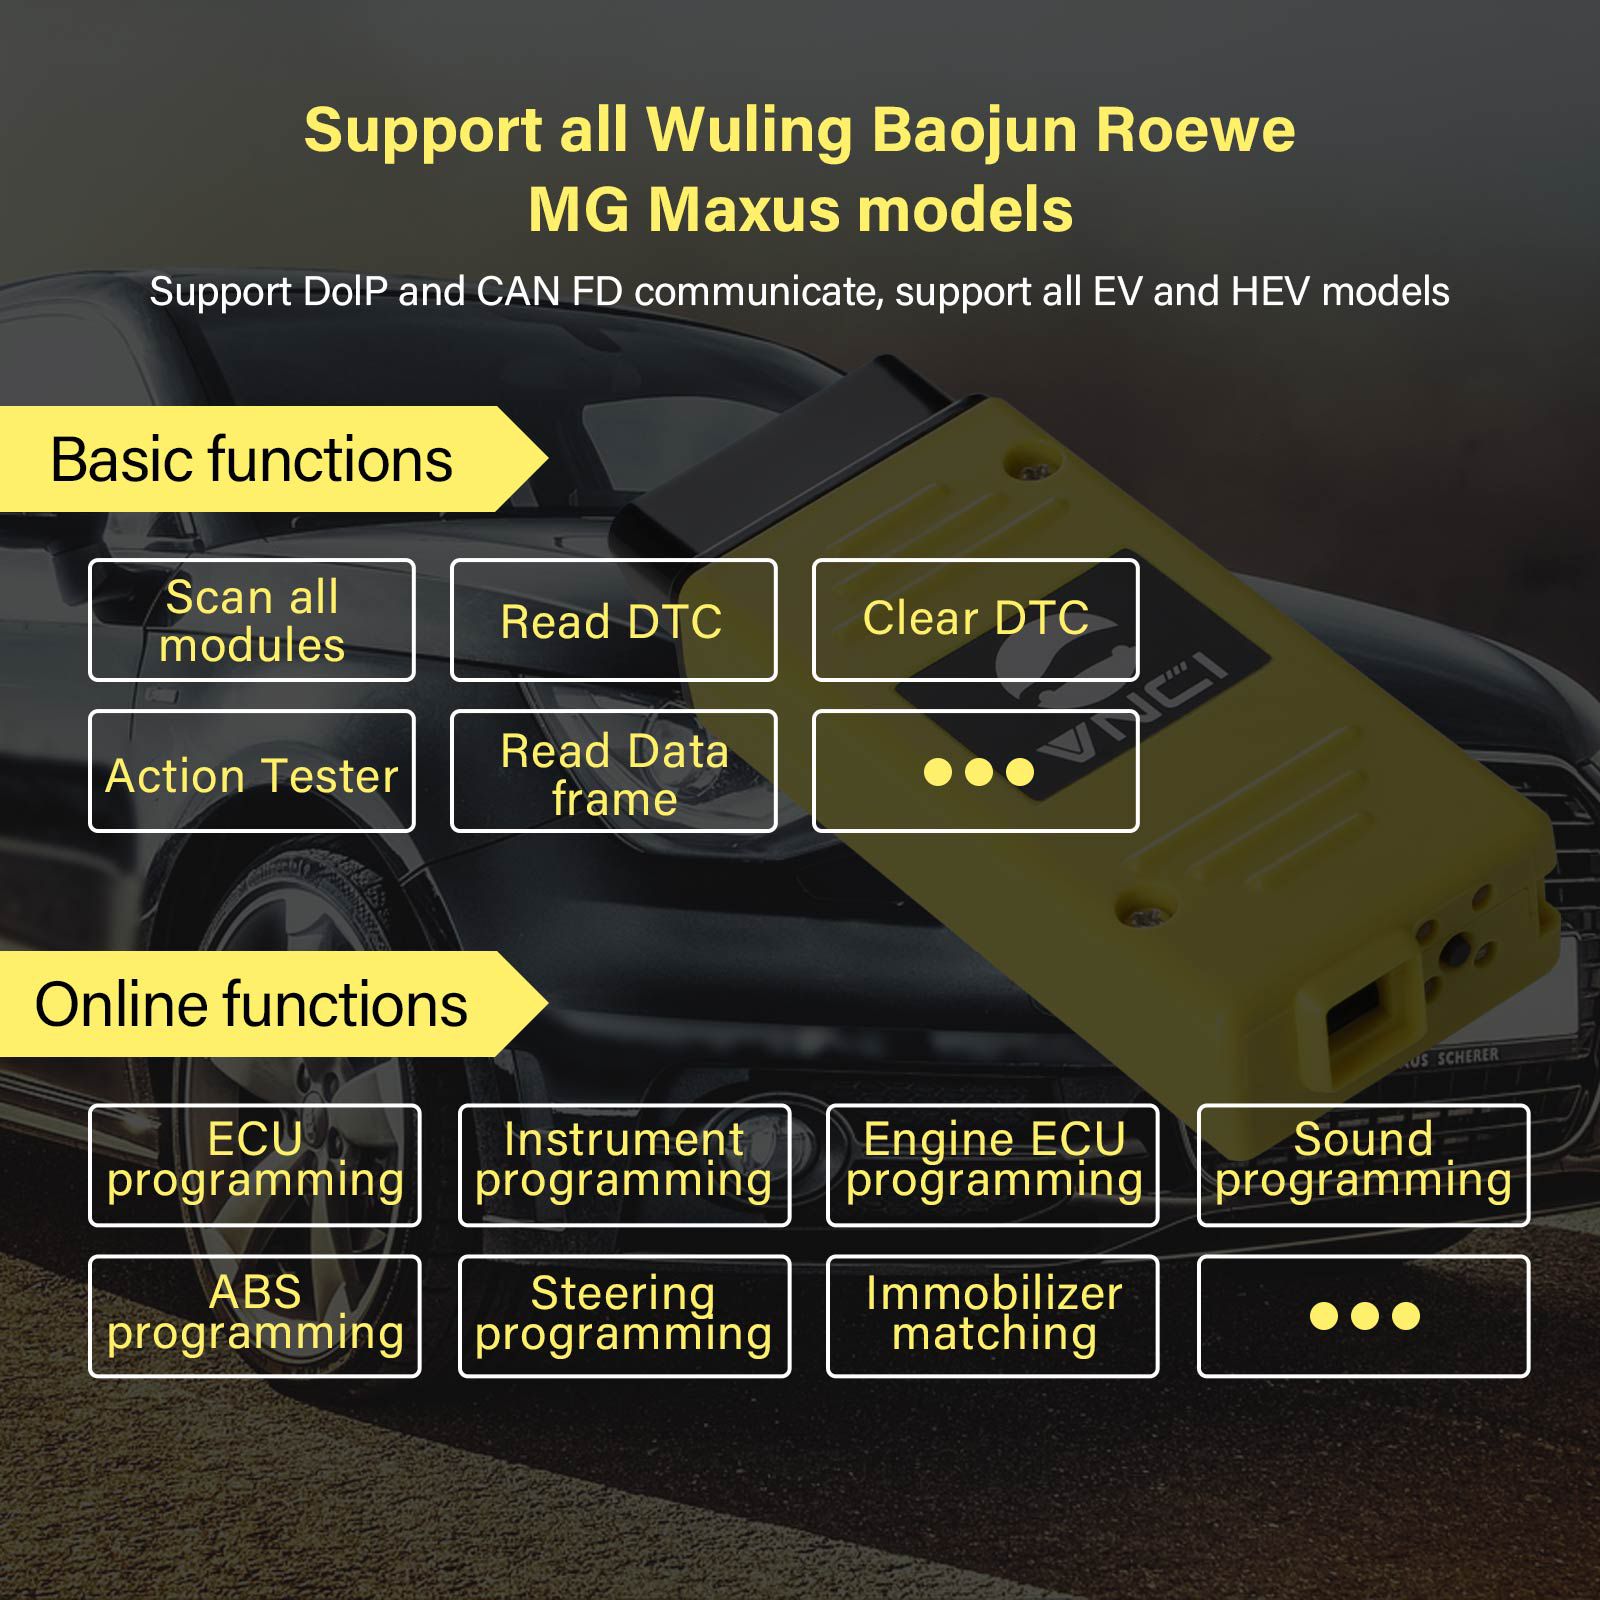 VNCI VDI3 Rongwei MG Wuling Baojun Datong Diagnostic Interface Compatible with OEM Software Driver, Plug and Play